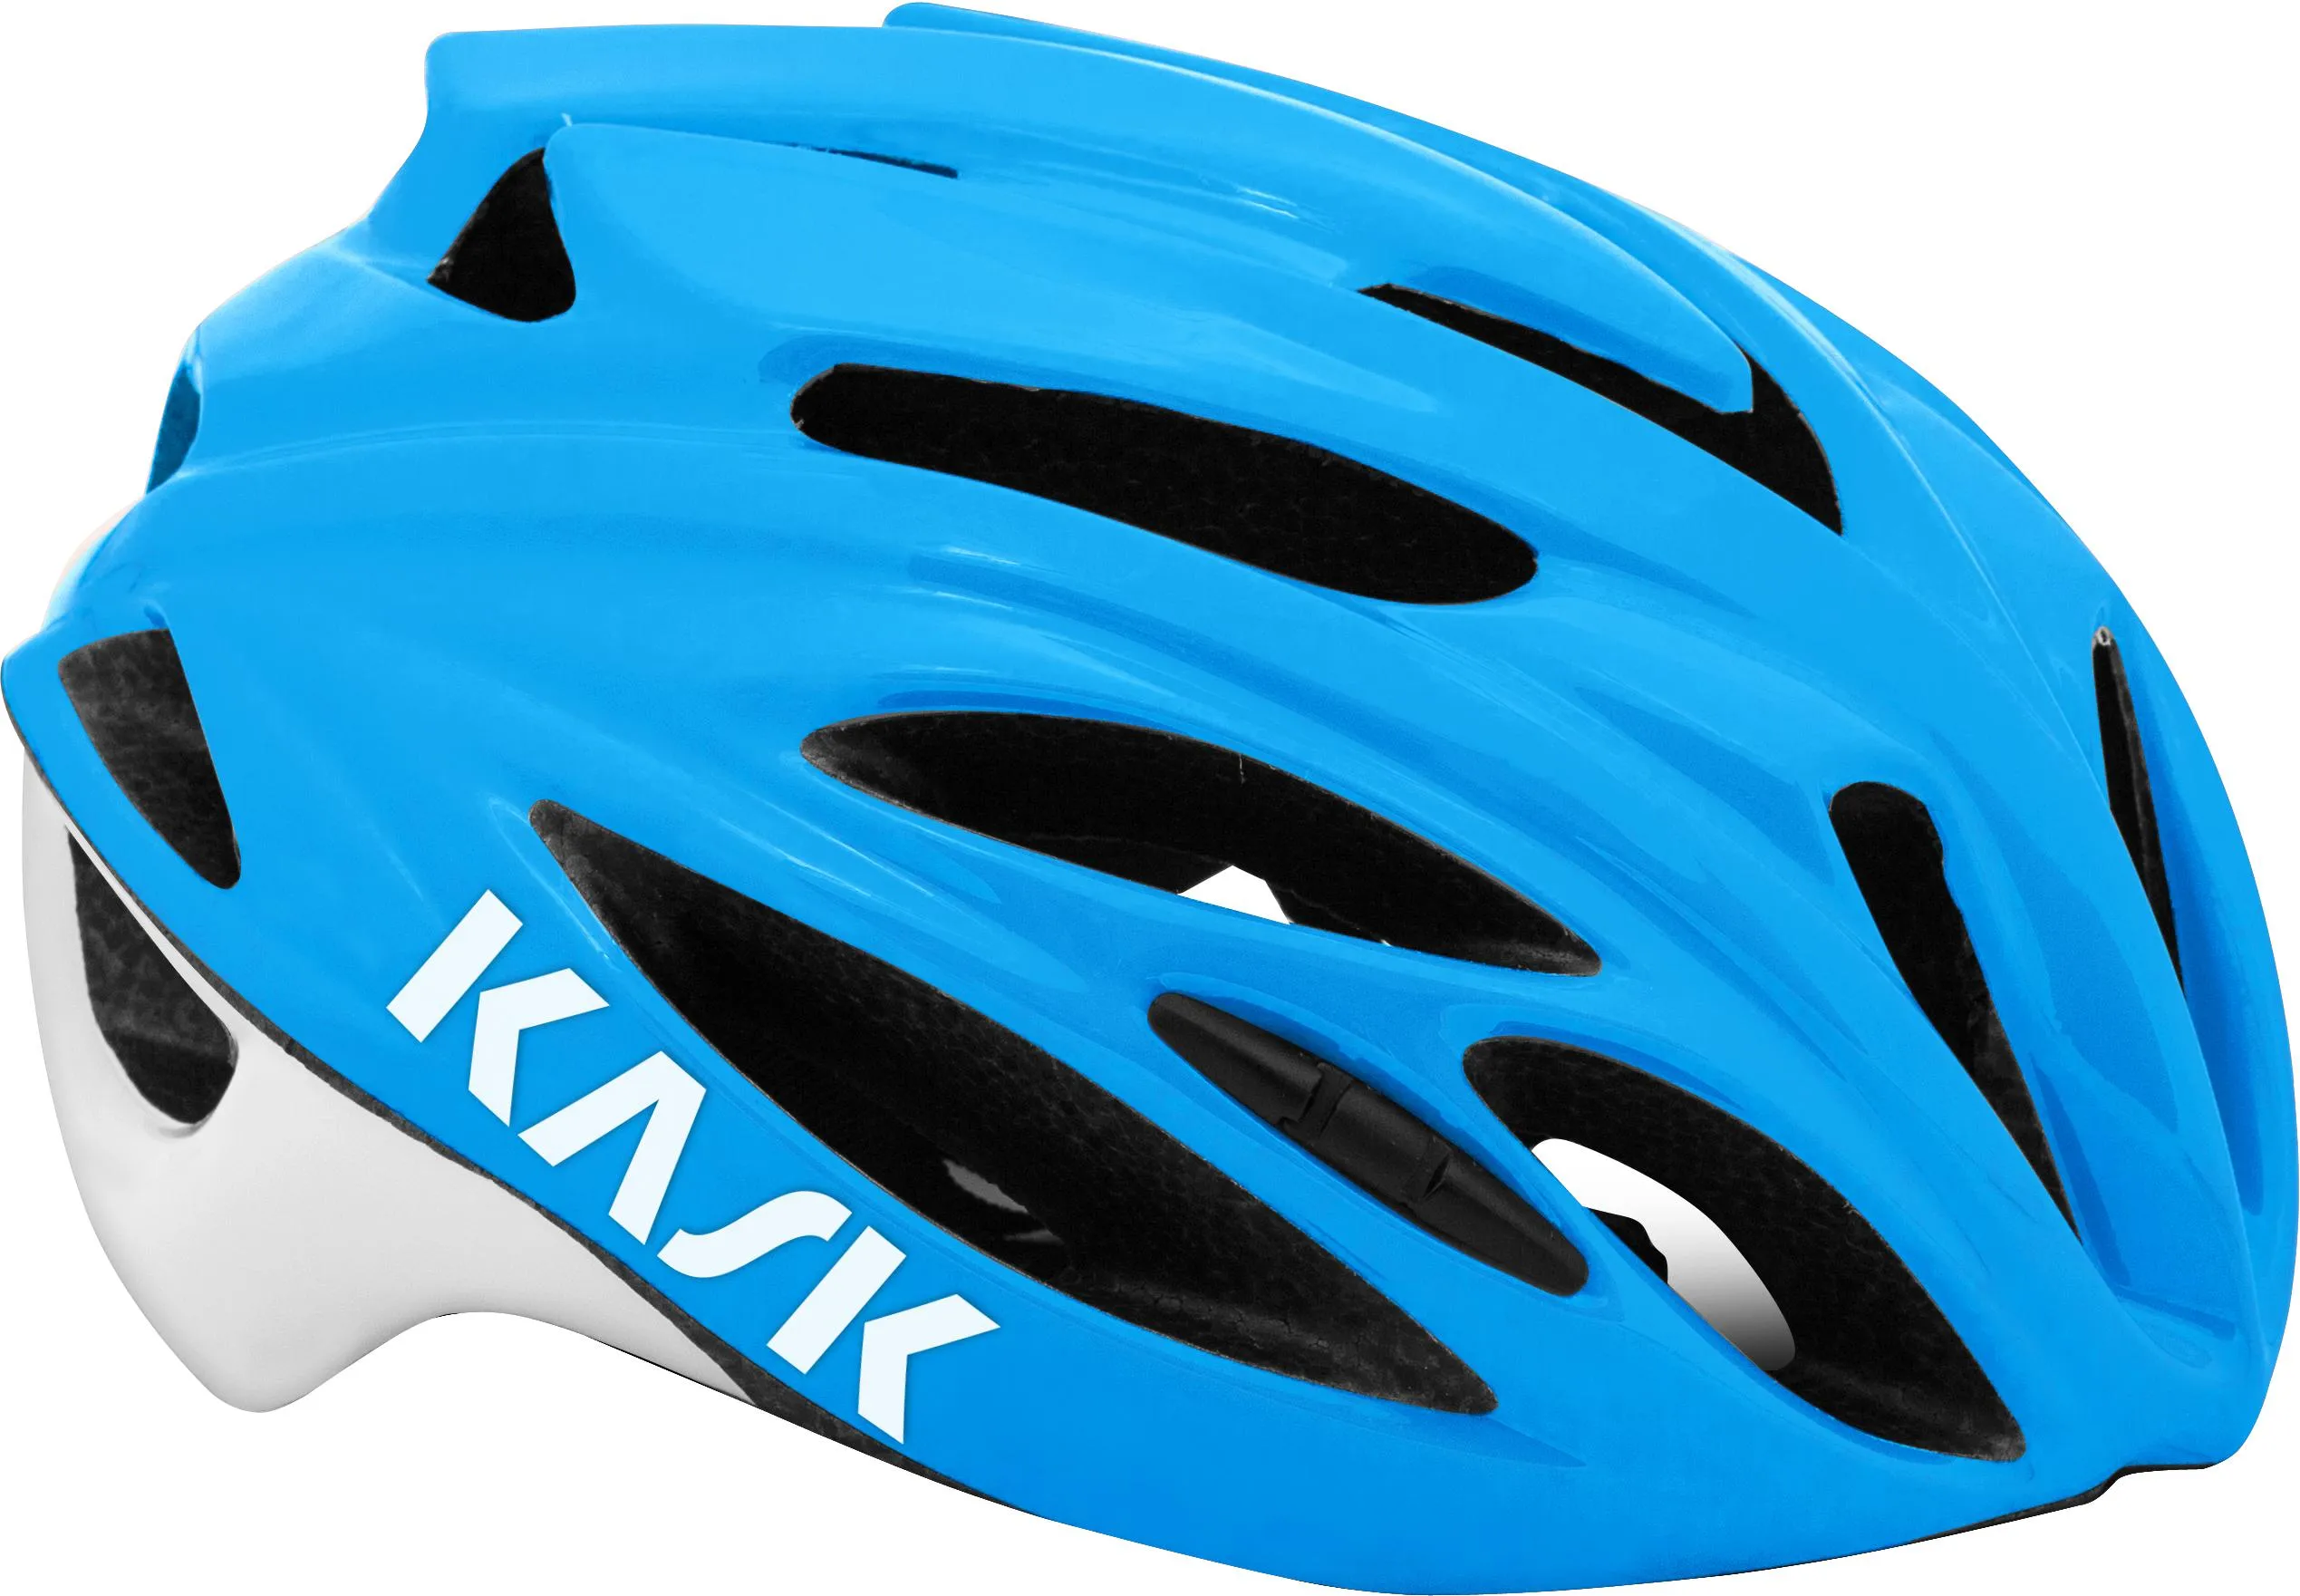 Kask Rapido Road Helmet, Blue